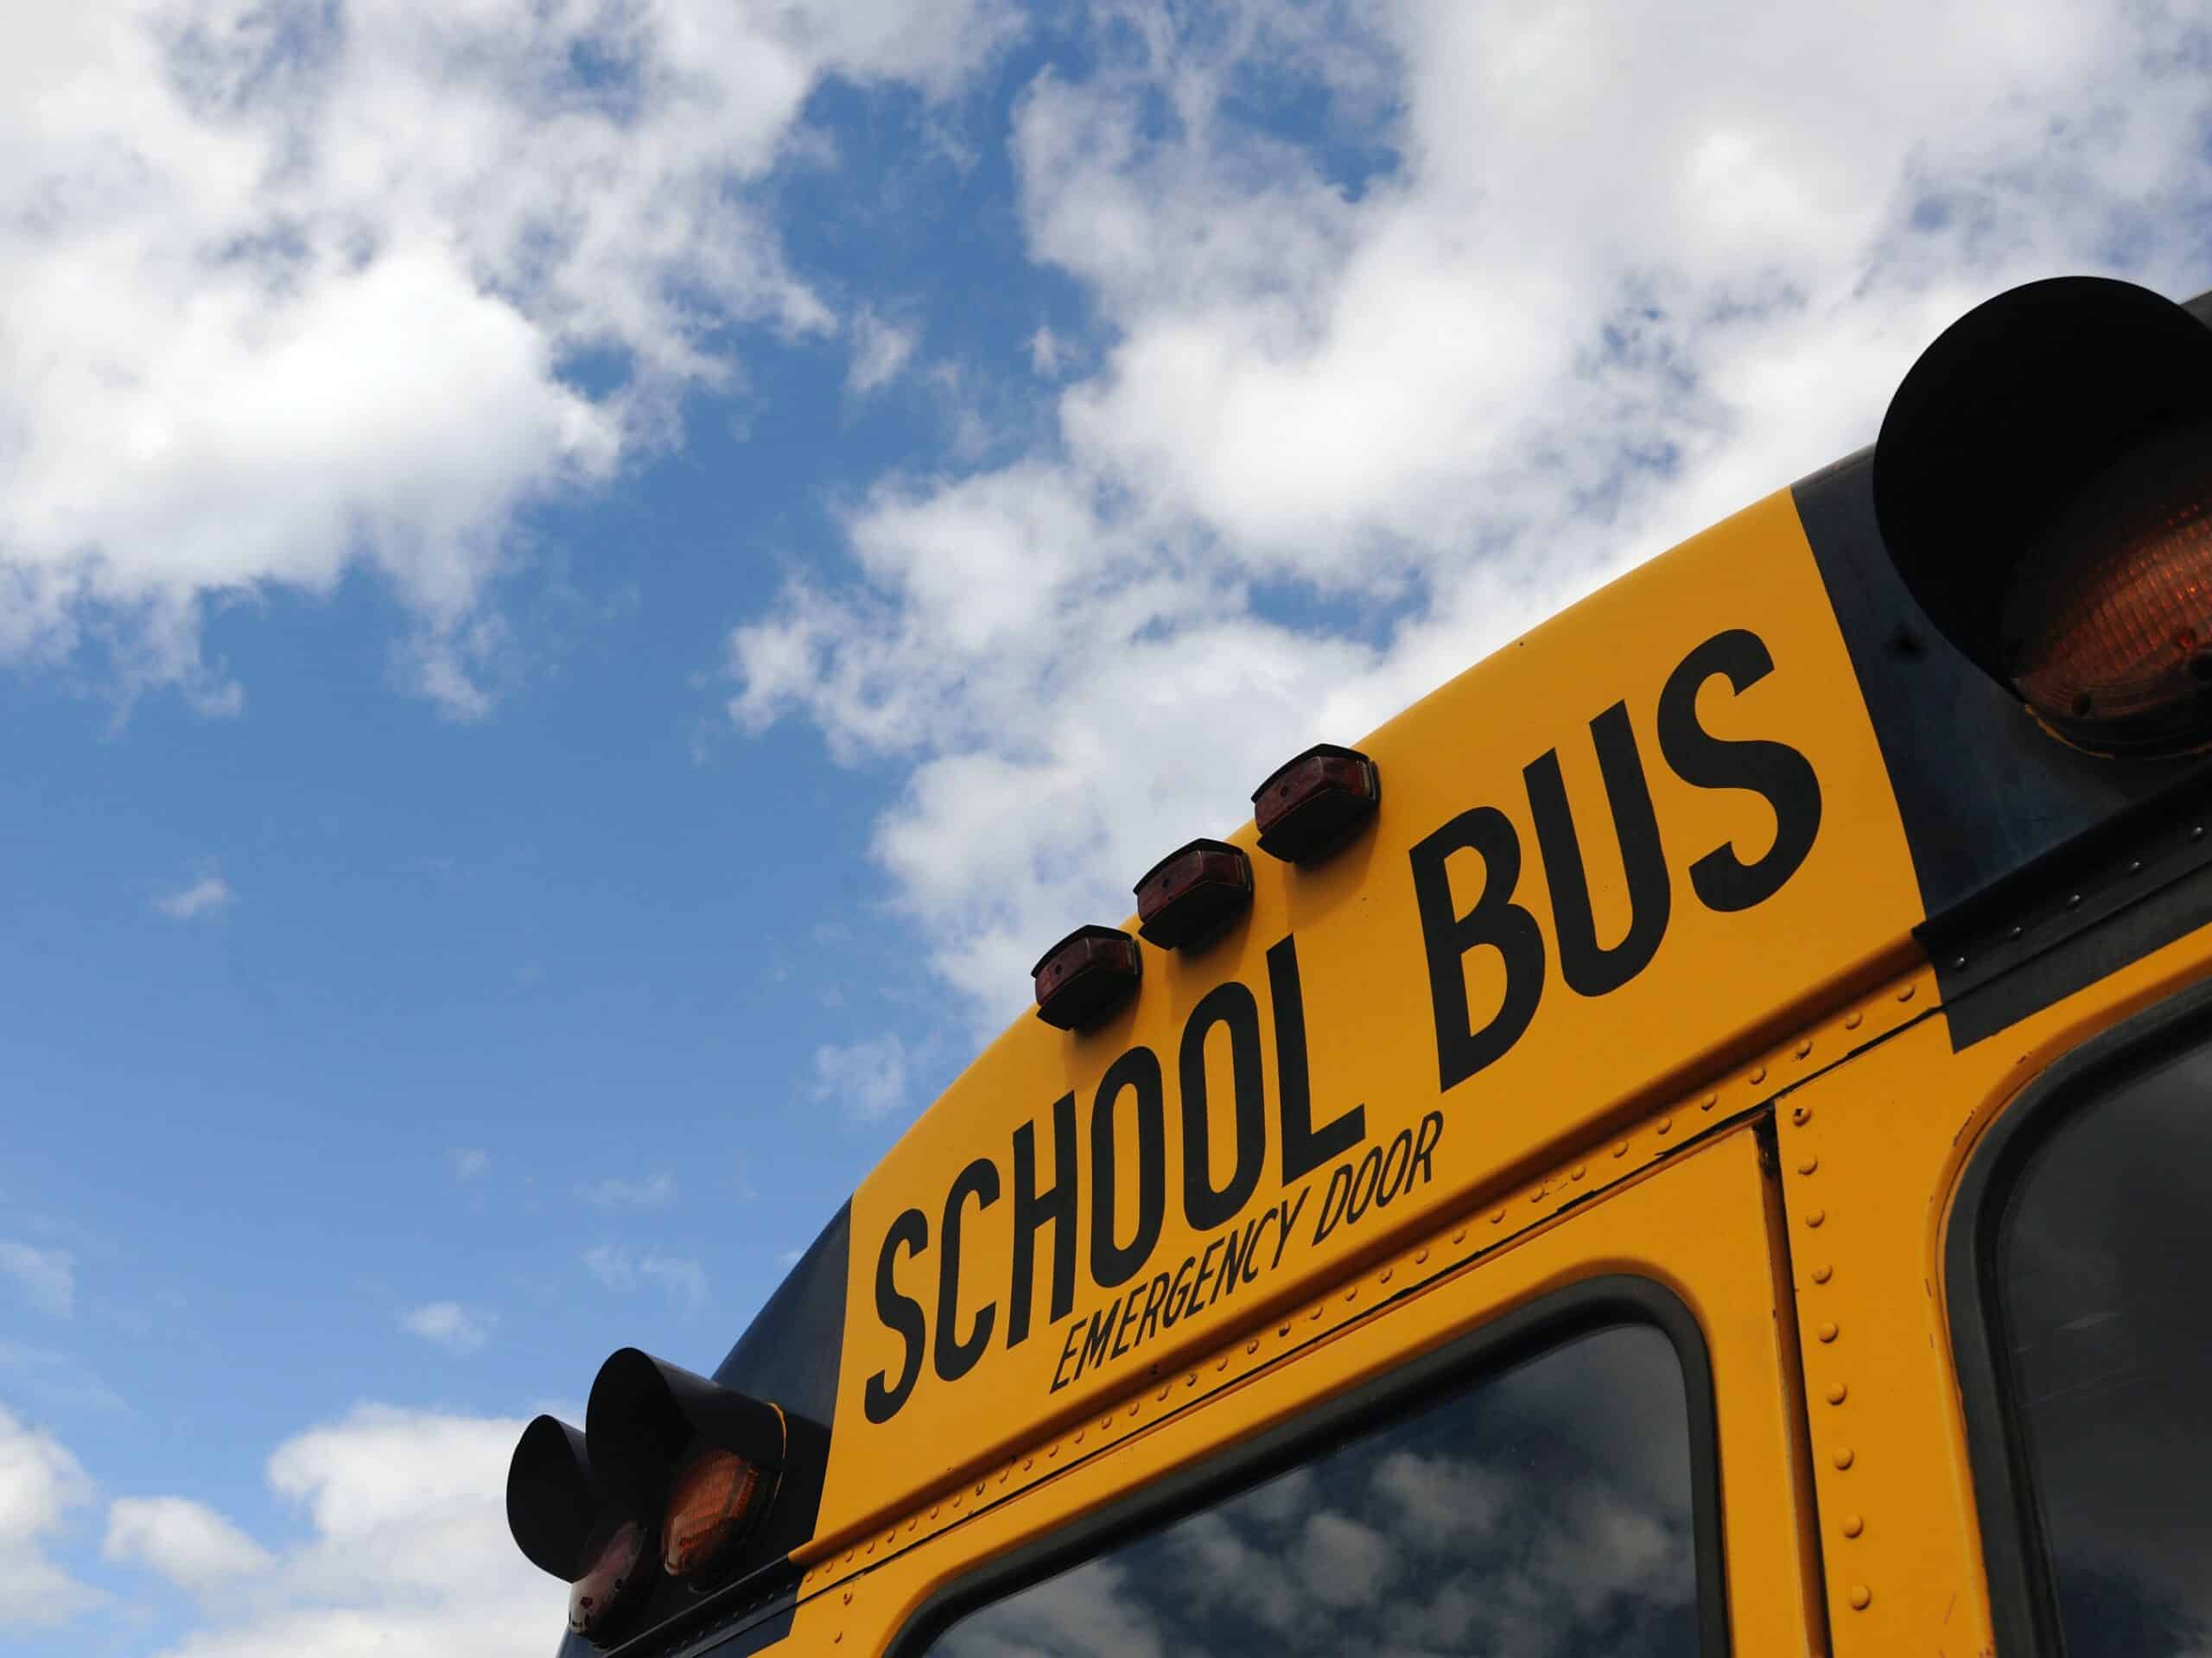 School bus stop arm safety program